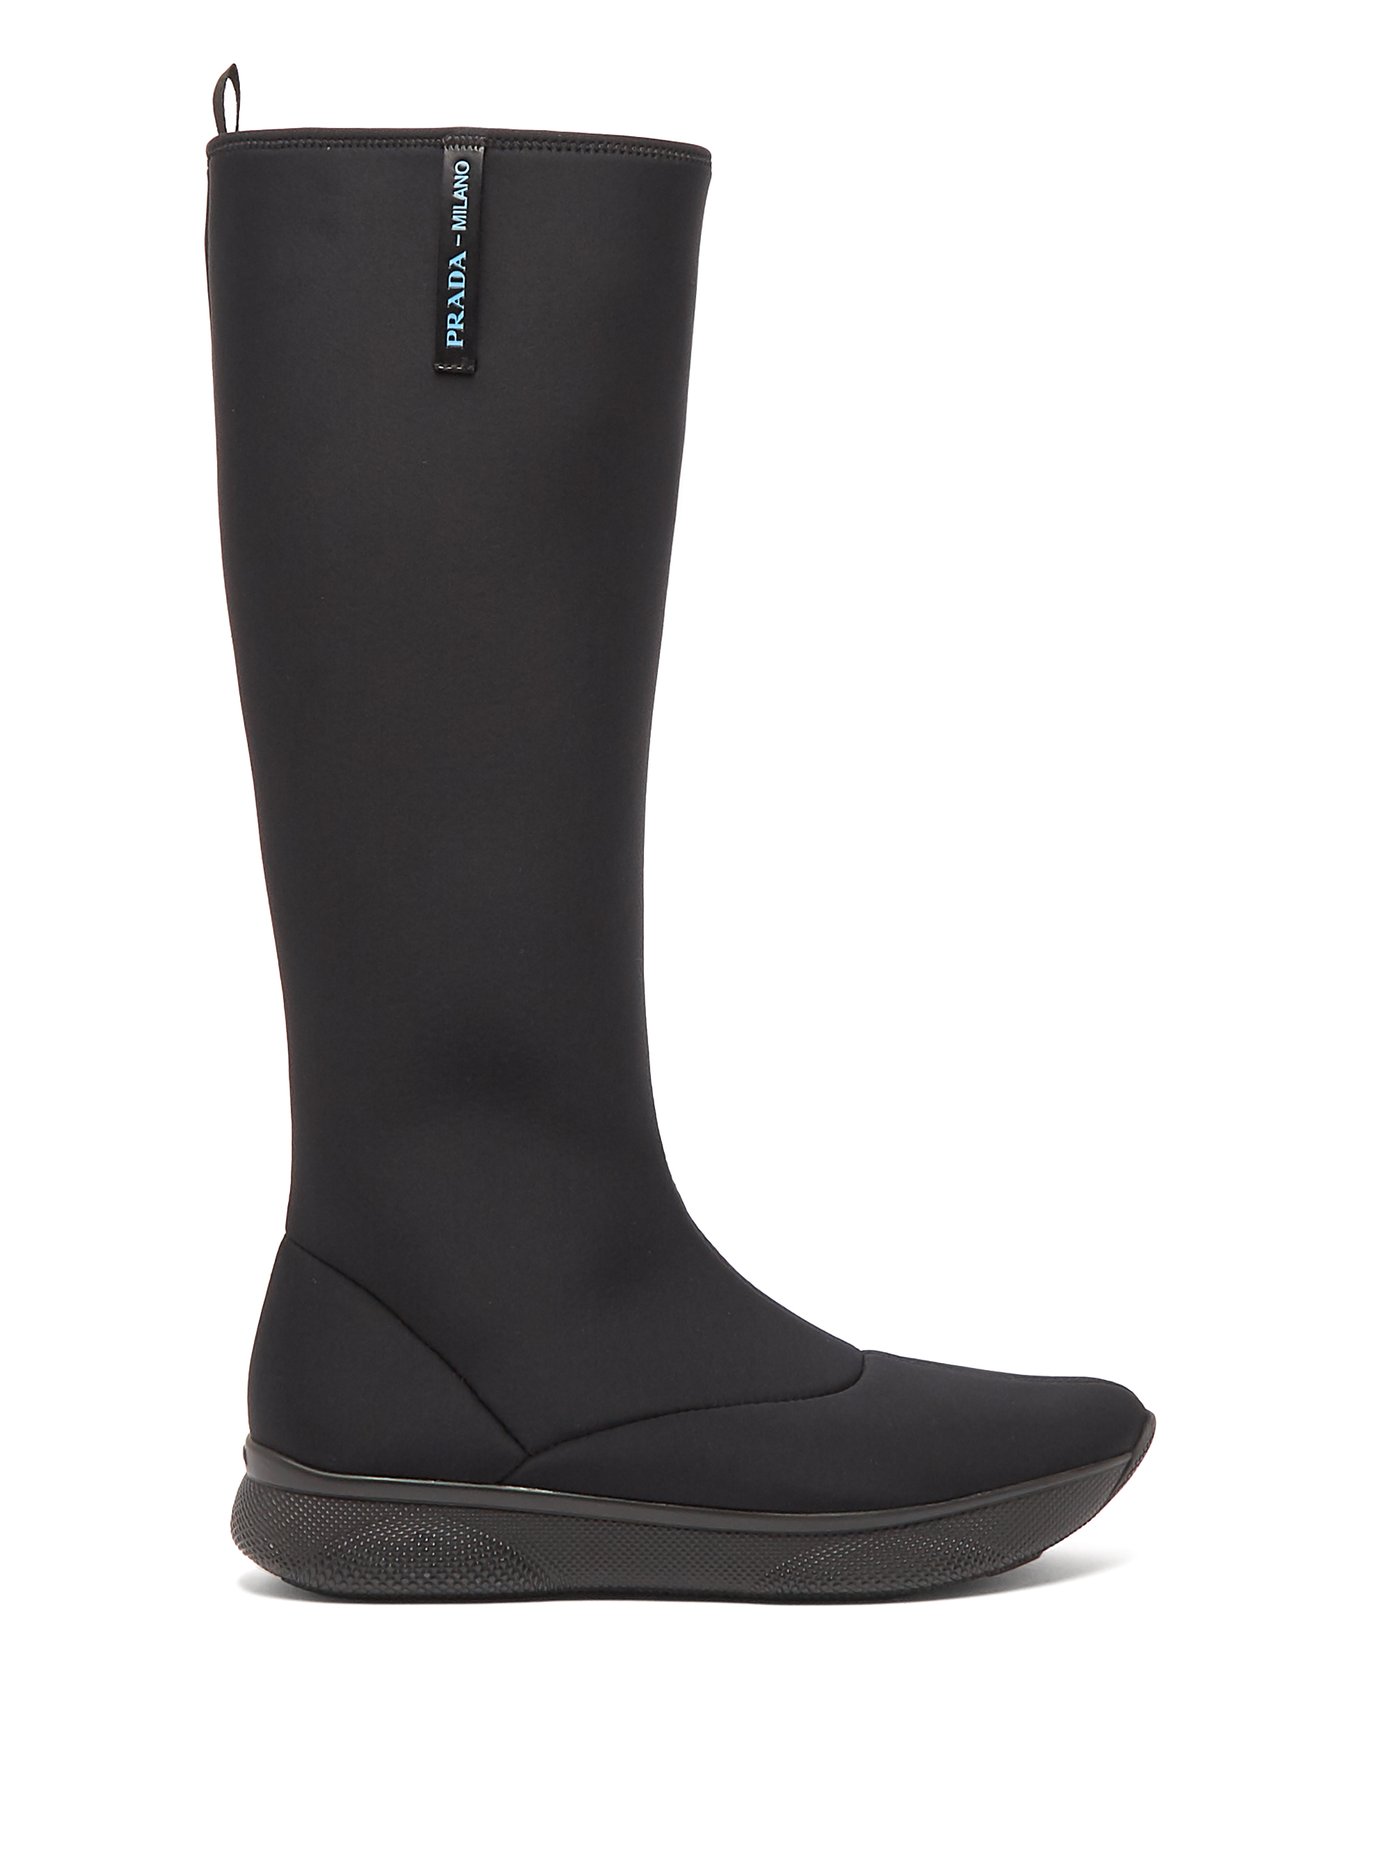 Neoprene knee-high boots | Prada 